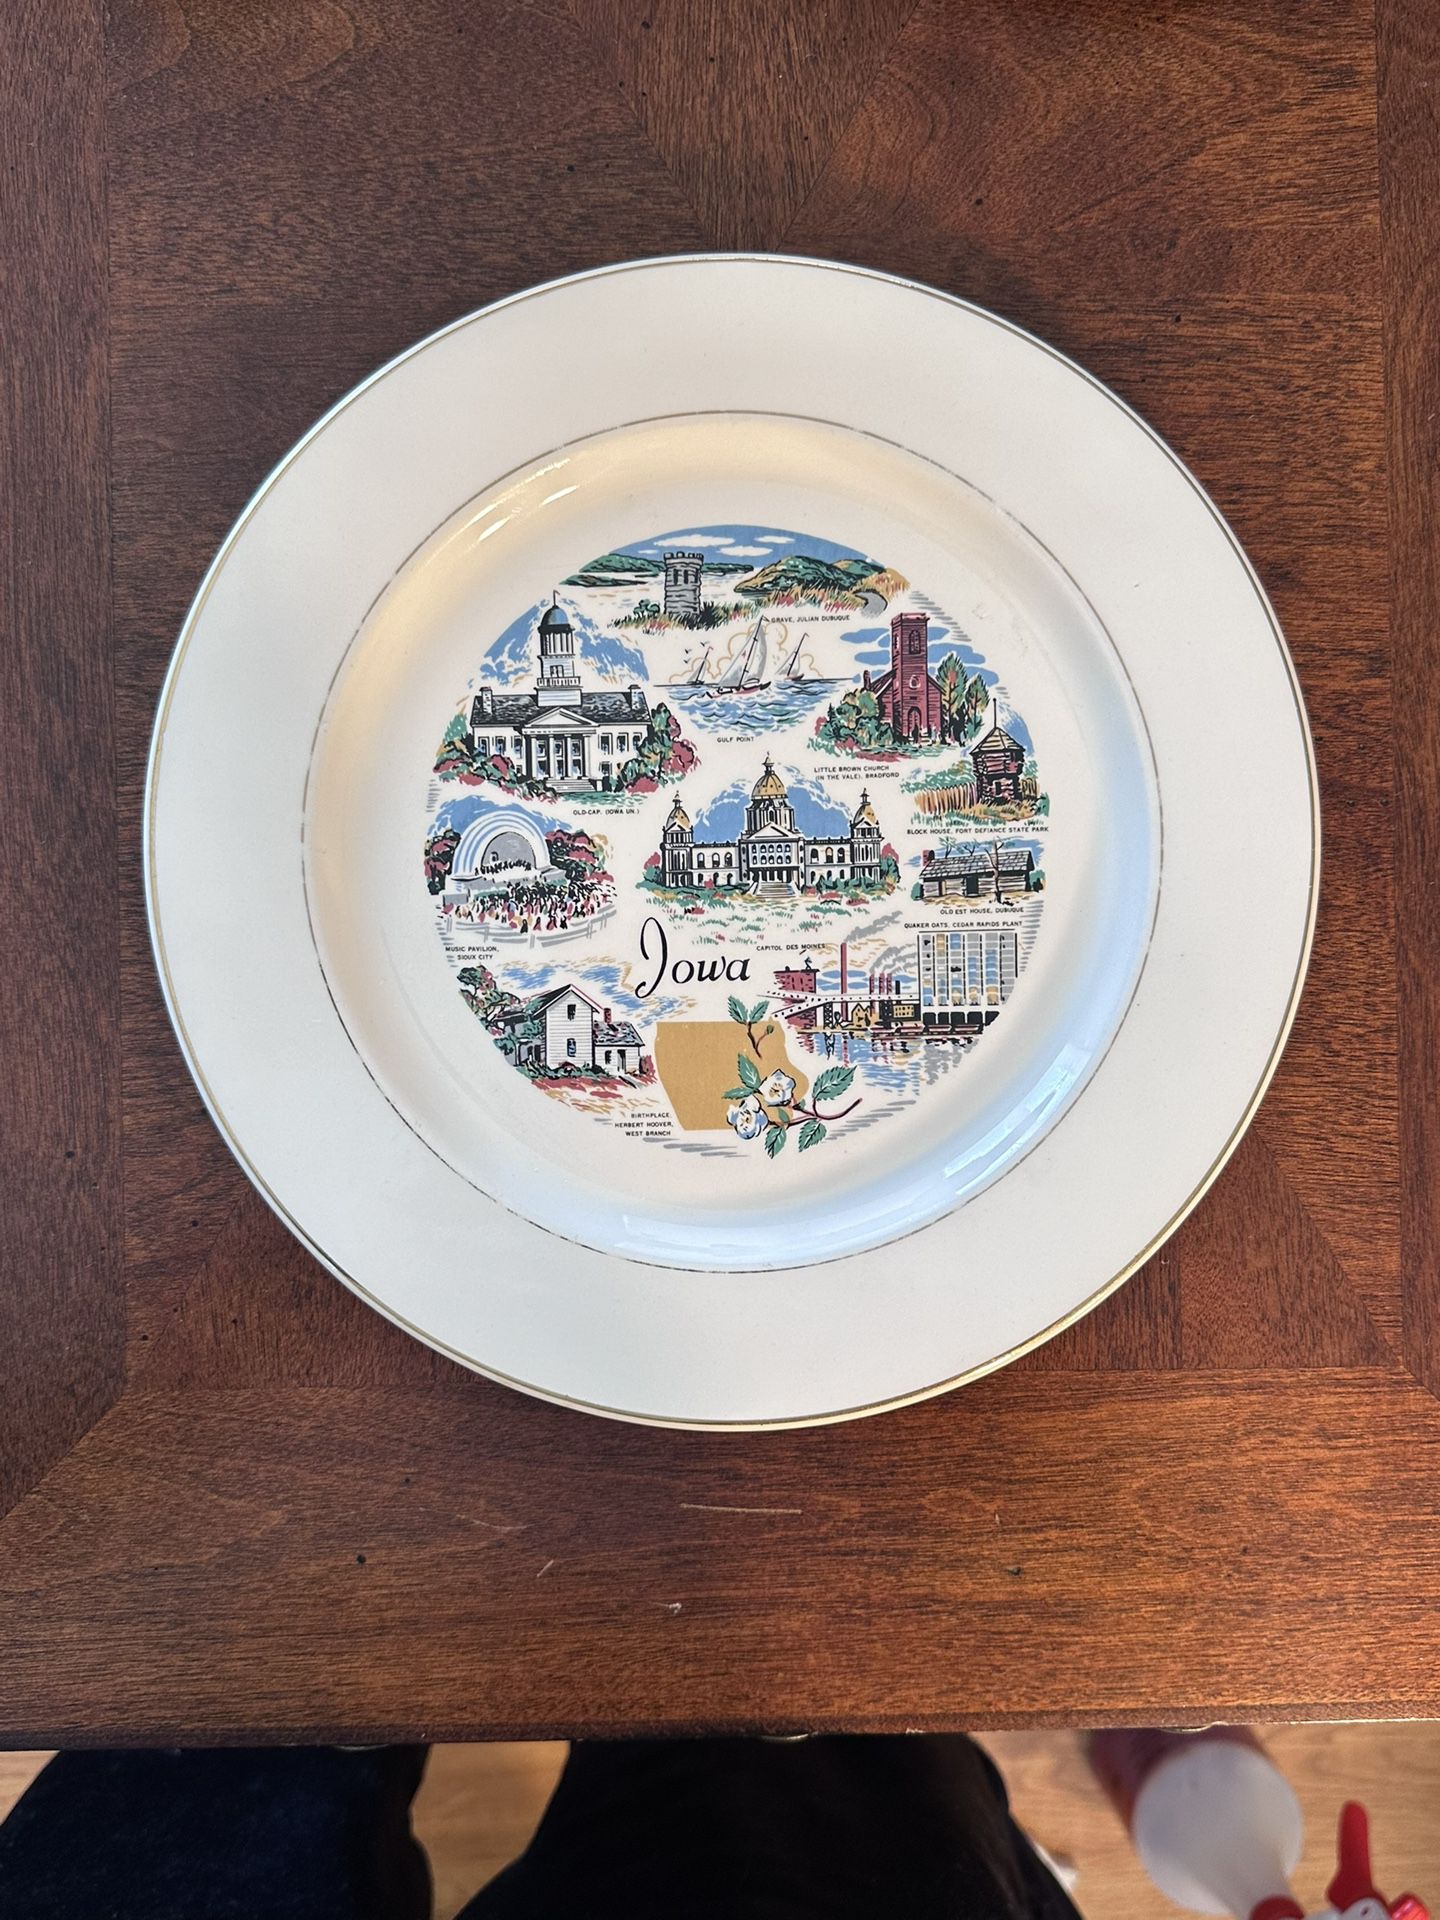 Vintage Souvenir Plate IOWA Little Brown Church, Quaker Oats...